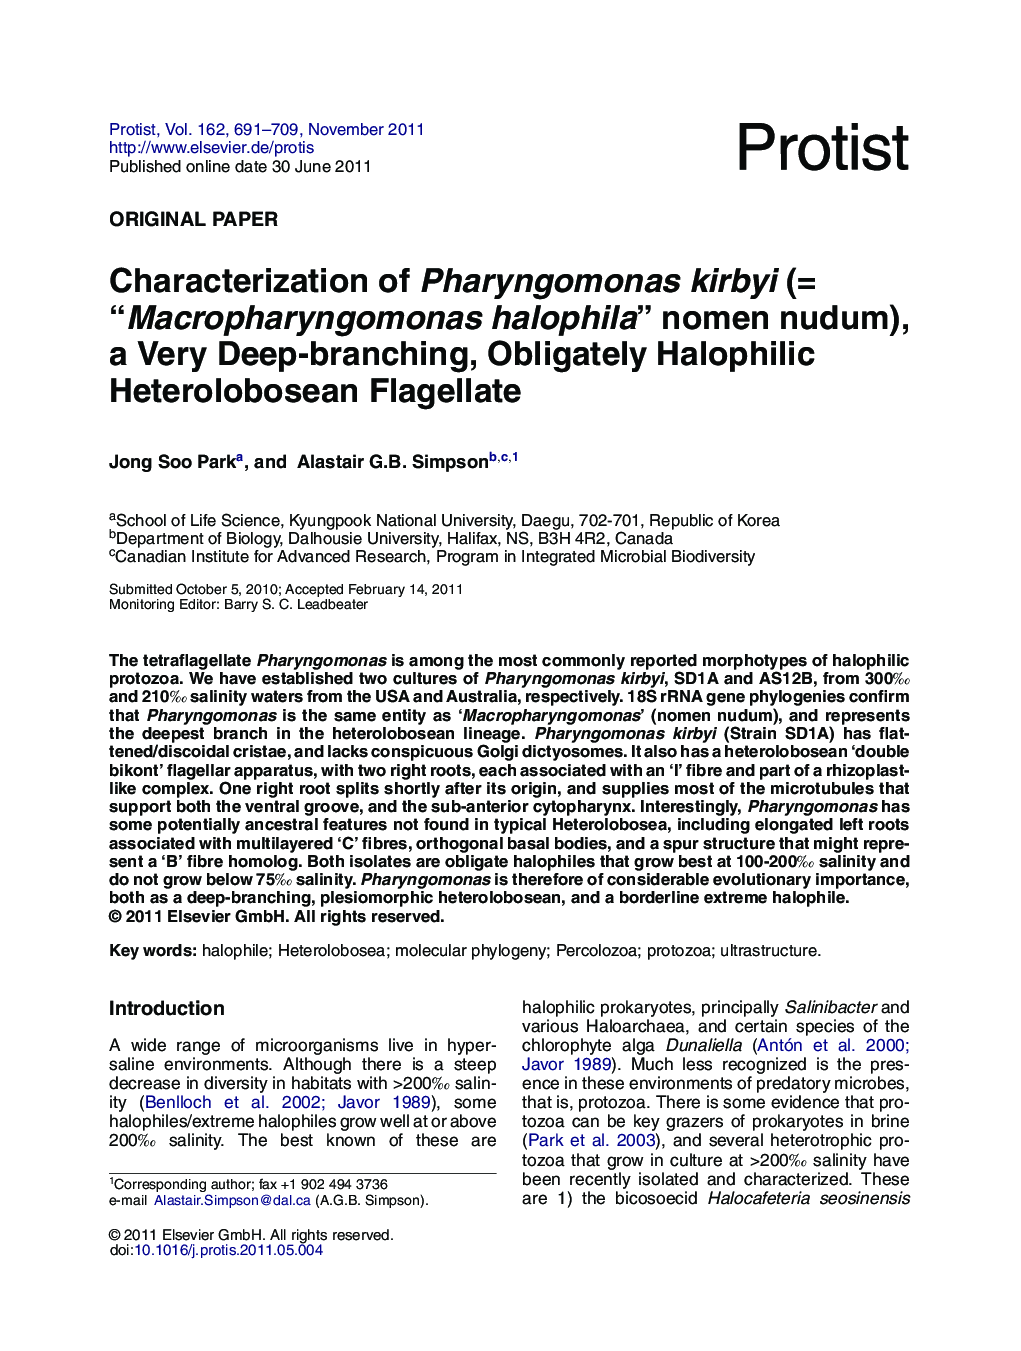 Characterization of Pharyngomonas kirbyi (= “Macropharyngomonas halophila” nomen nudum), a Very Deep-branching, Obligately Halophilic Heterolobosean Flagellate